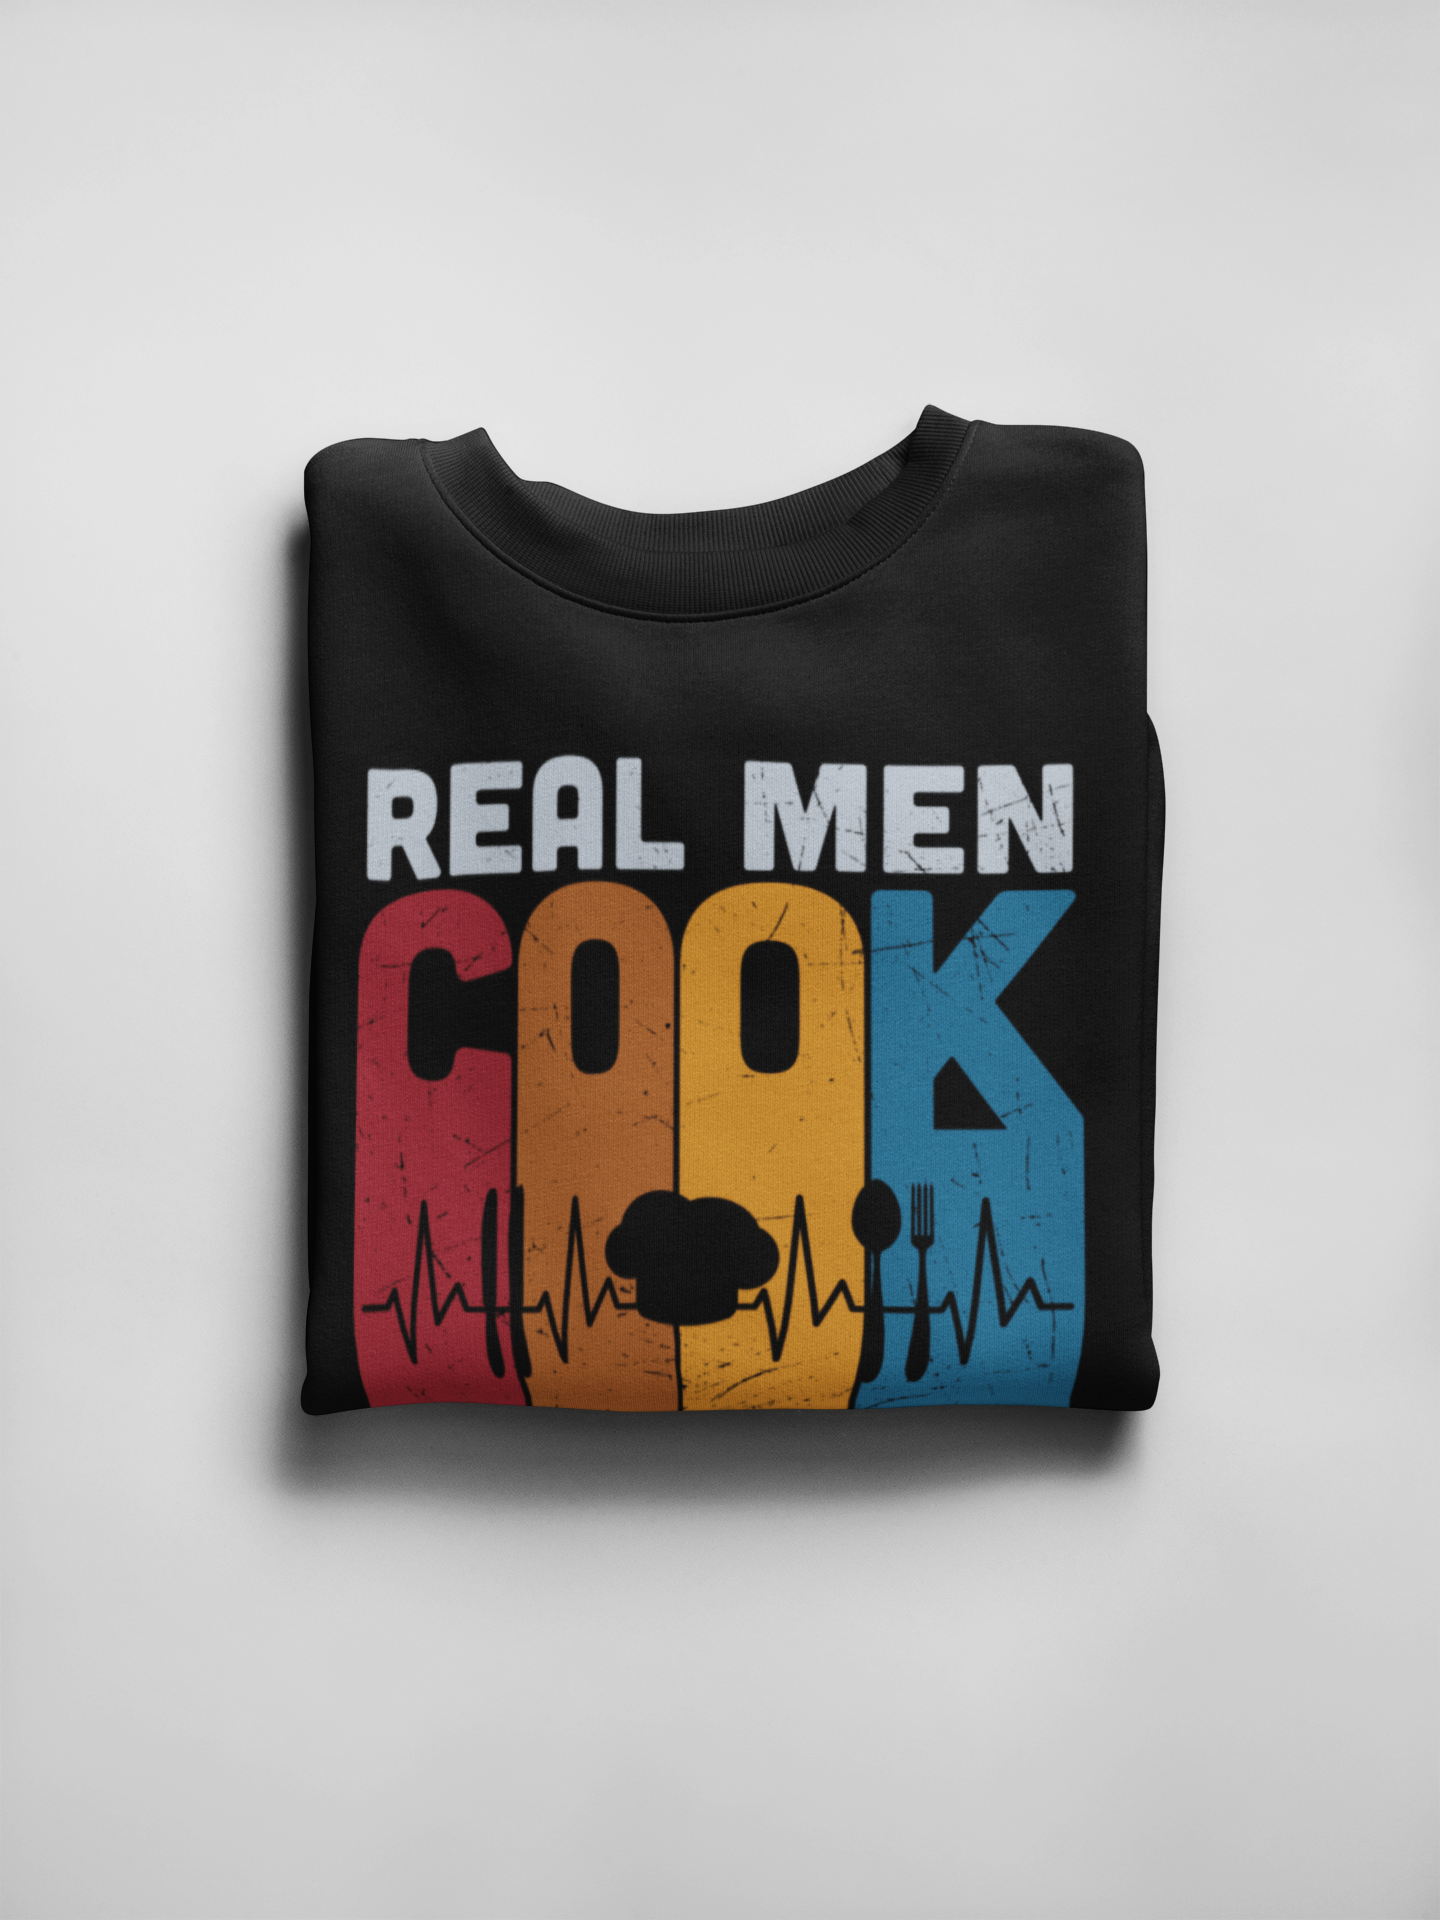 Real Men Cook Dense Oversized Black Unisex T-Shirt for Men | Masterchef Gurkirat Collection | ATOM